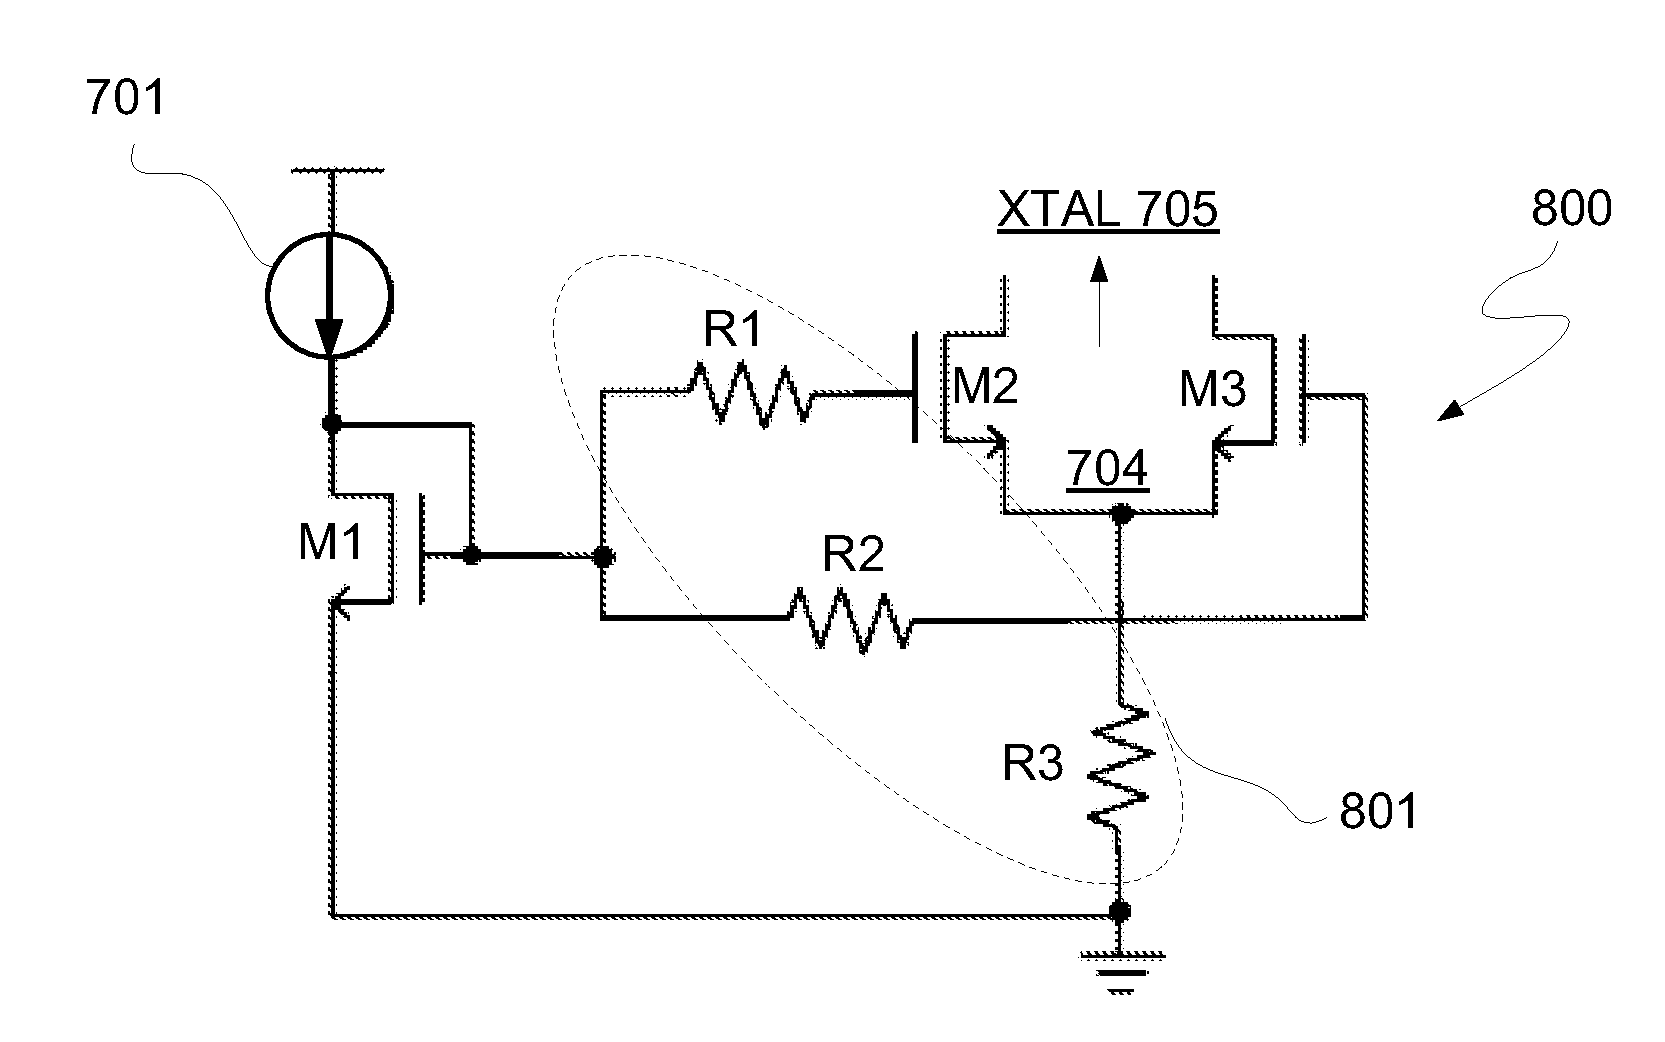 XTAL oscillator